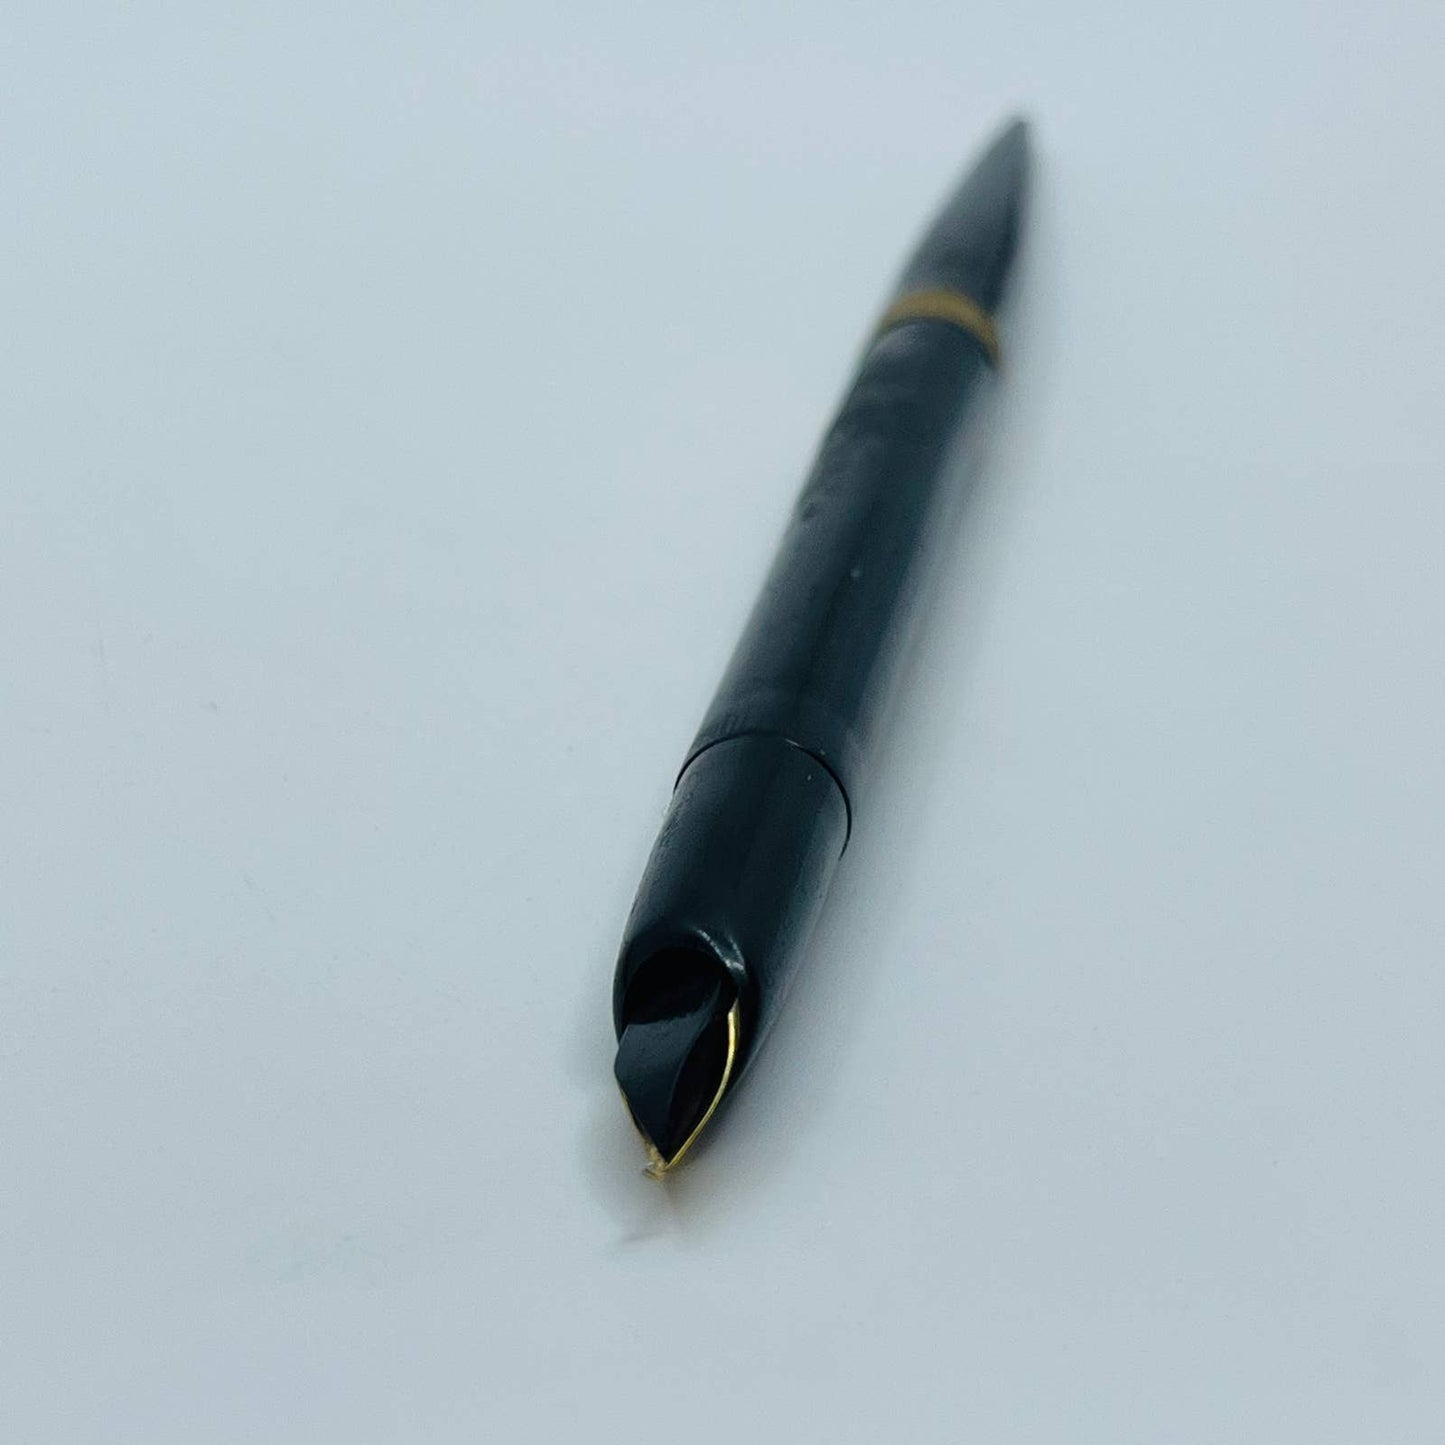 VTG Fountain Pen Black USA Single Gold Band SB3